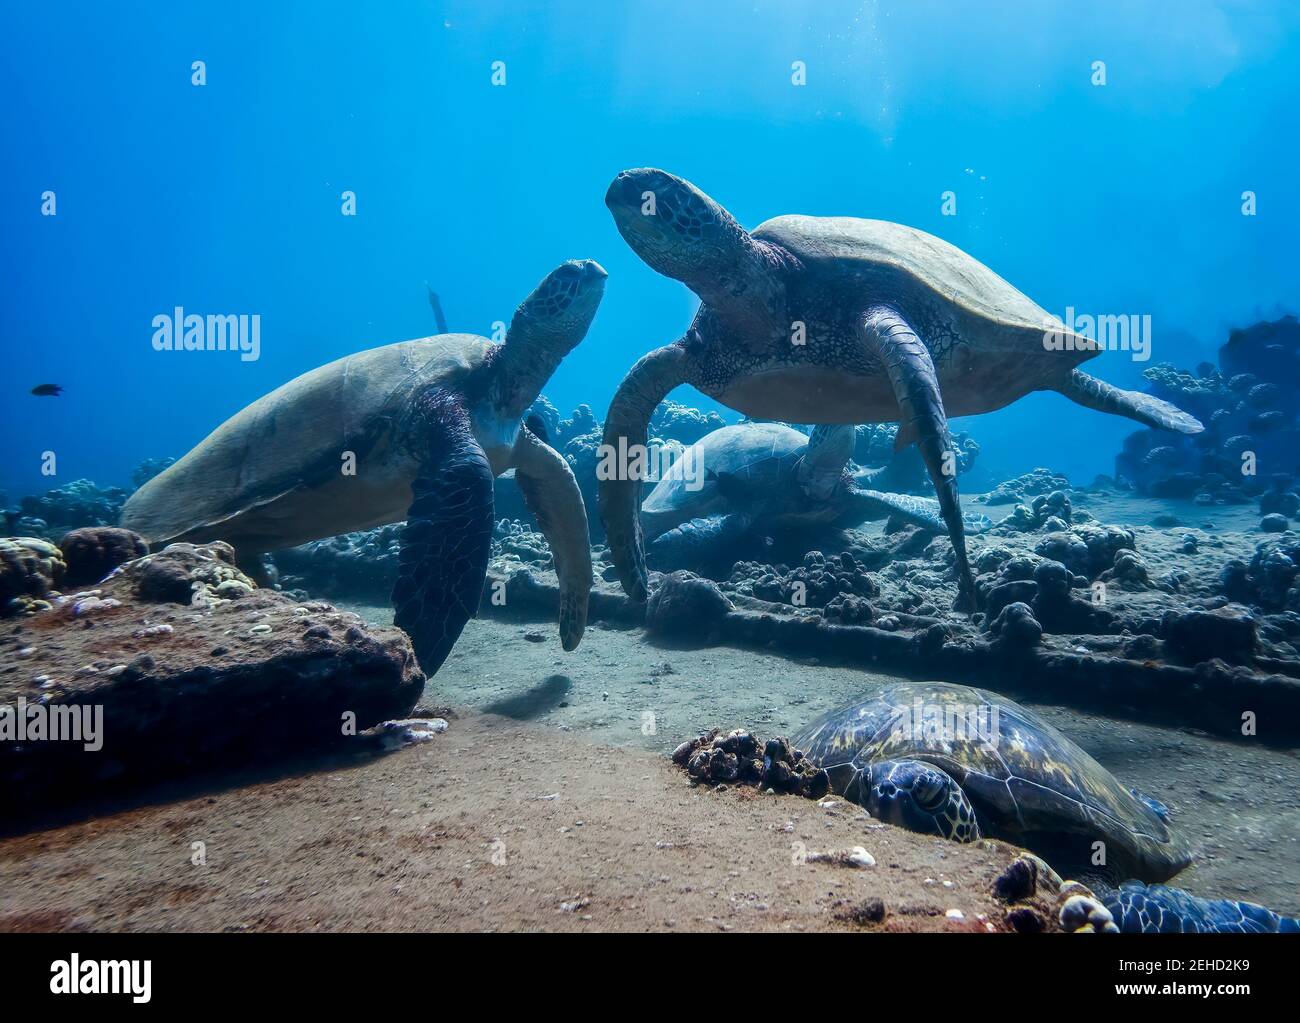 Group of sea turtles relaxing on coral reef underwater in Hawaii. Stock Photo